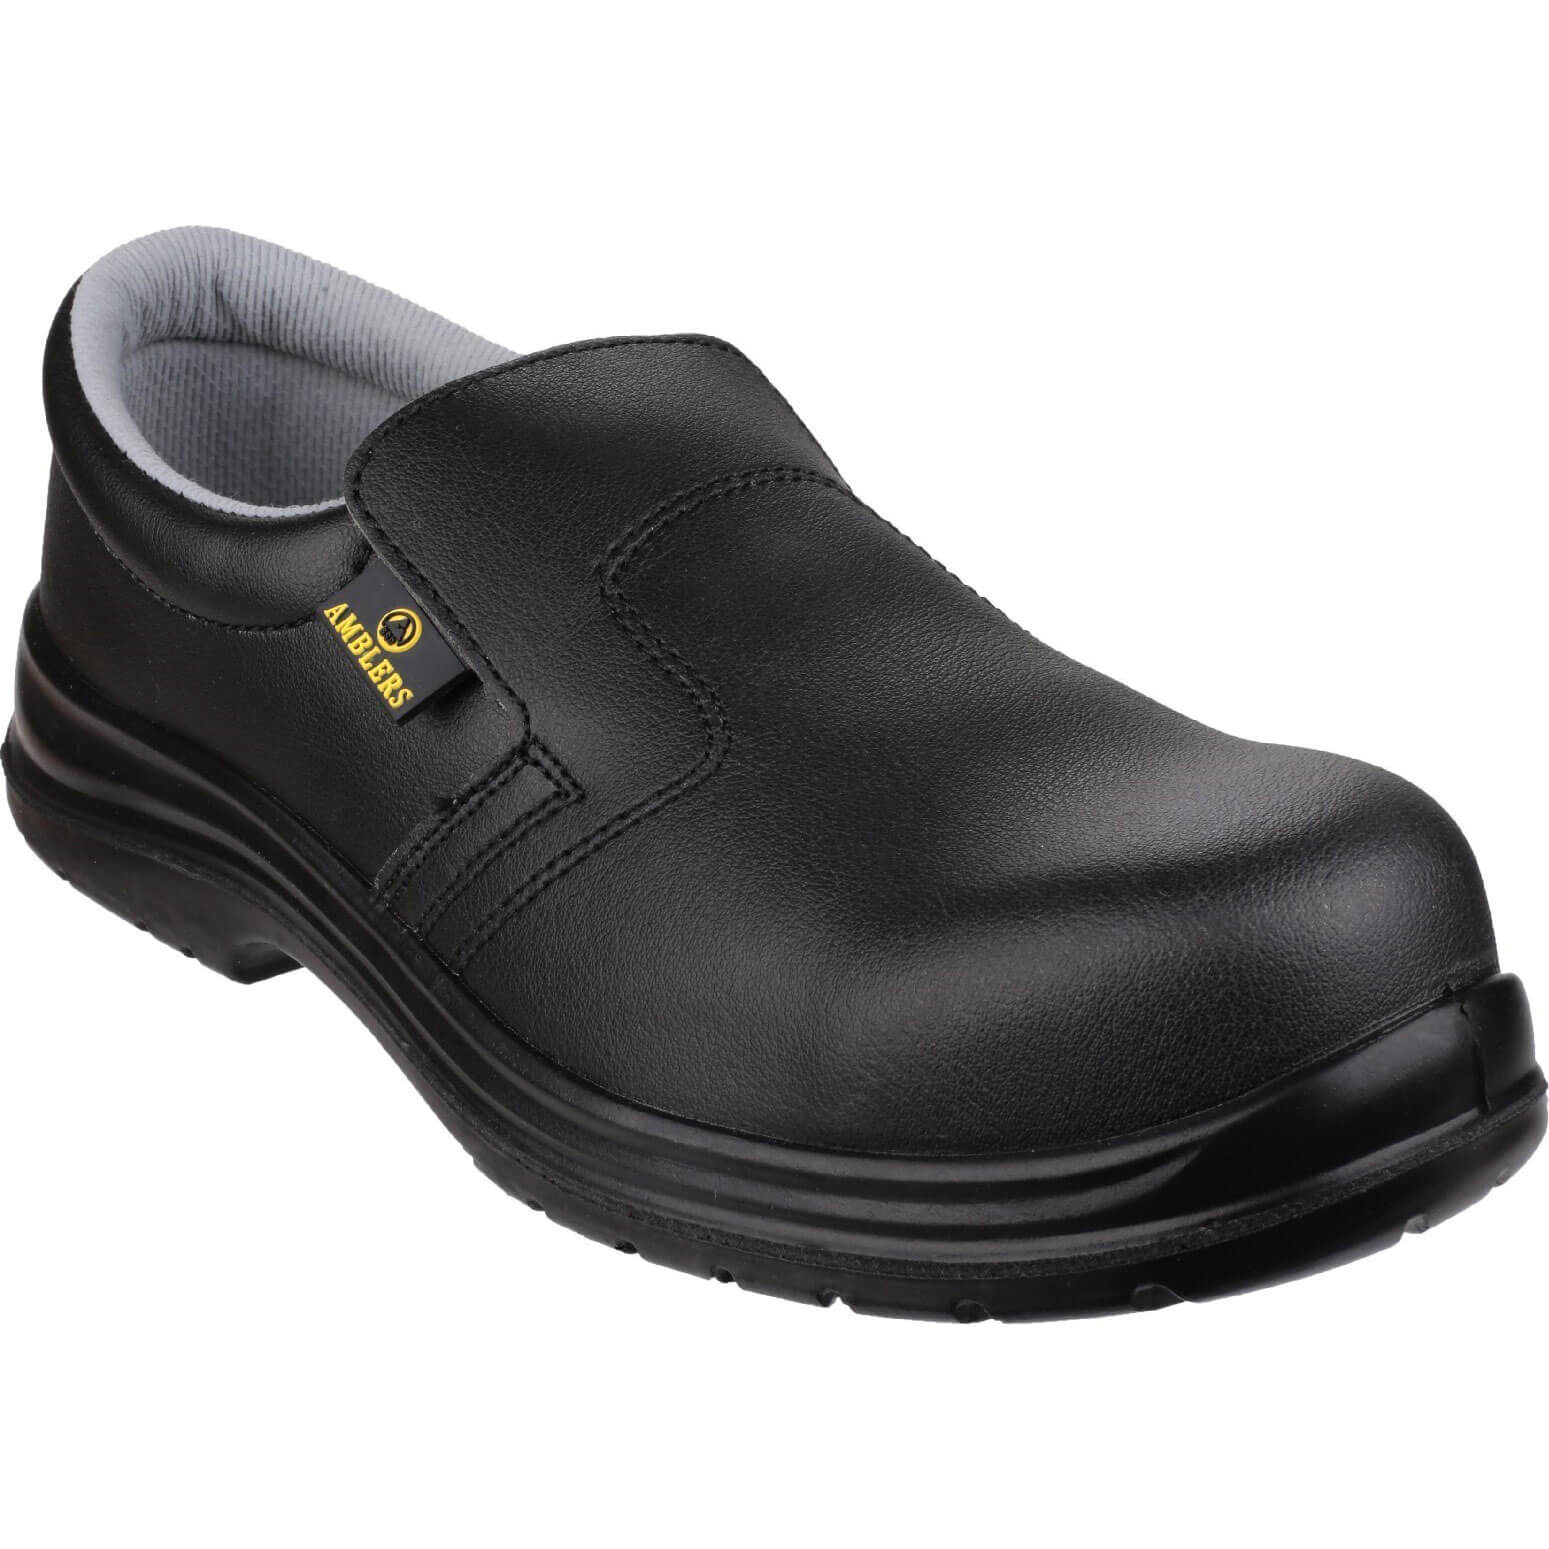 Amblers Safety FS661 Metal Free Lightweight Slip On Safety Shoe Black Size 7